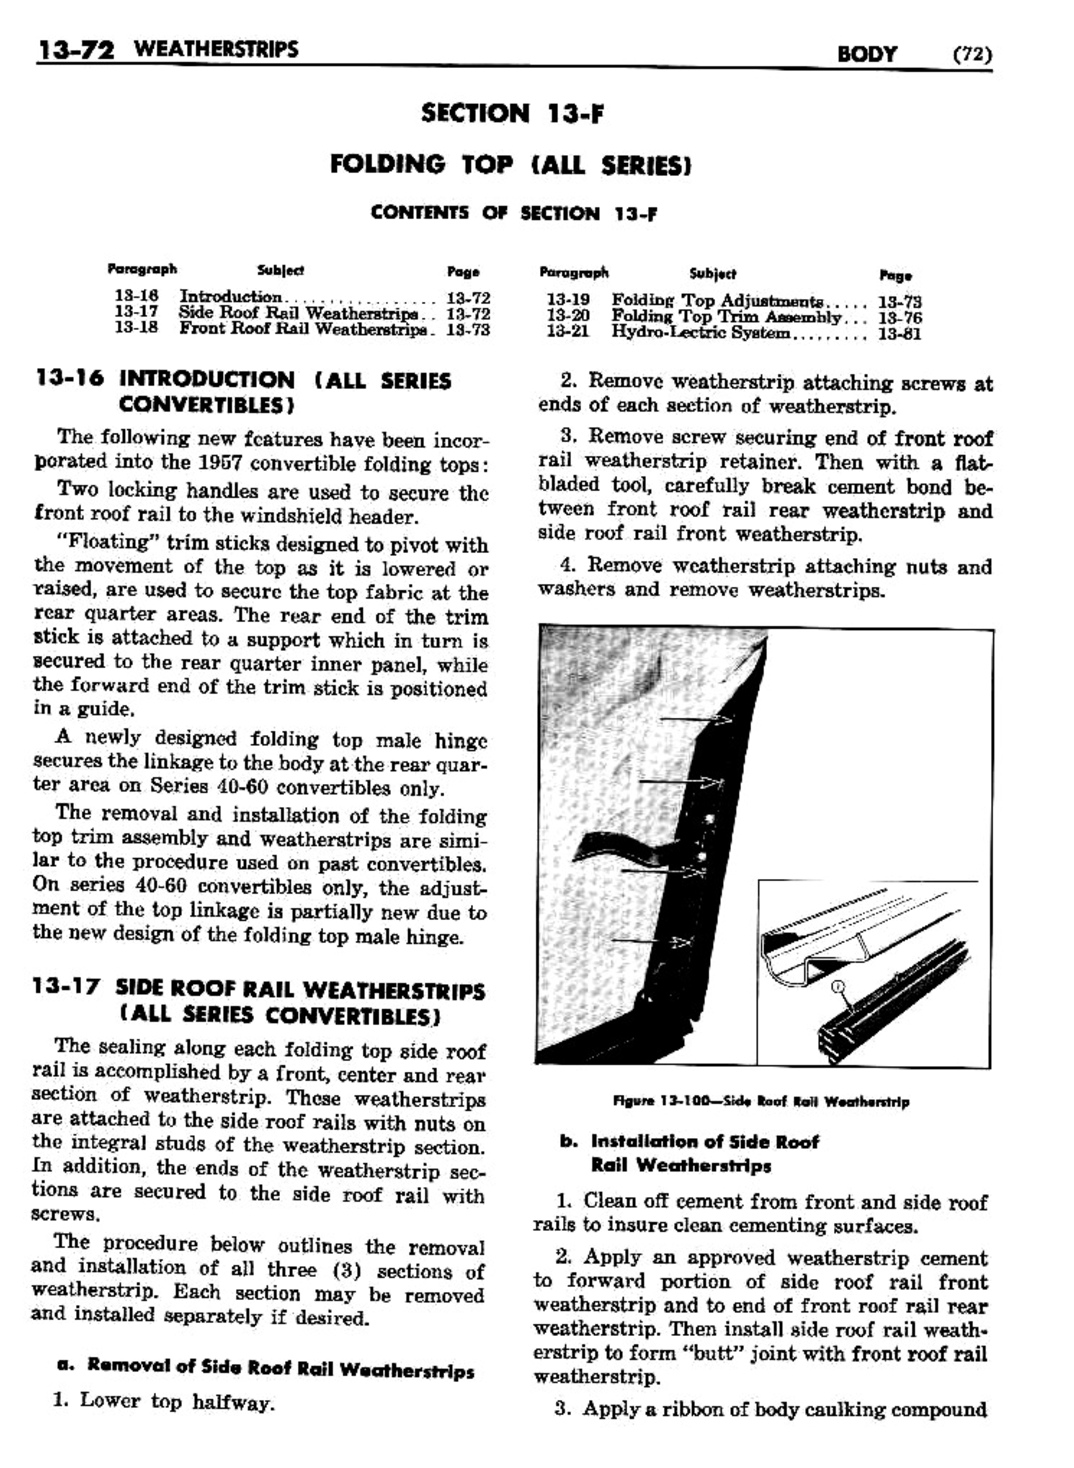 n_1957 Buick Body Service Manual-074-074.jpg